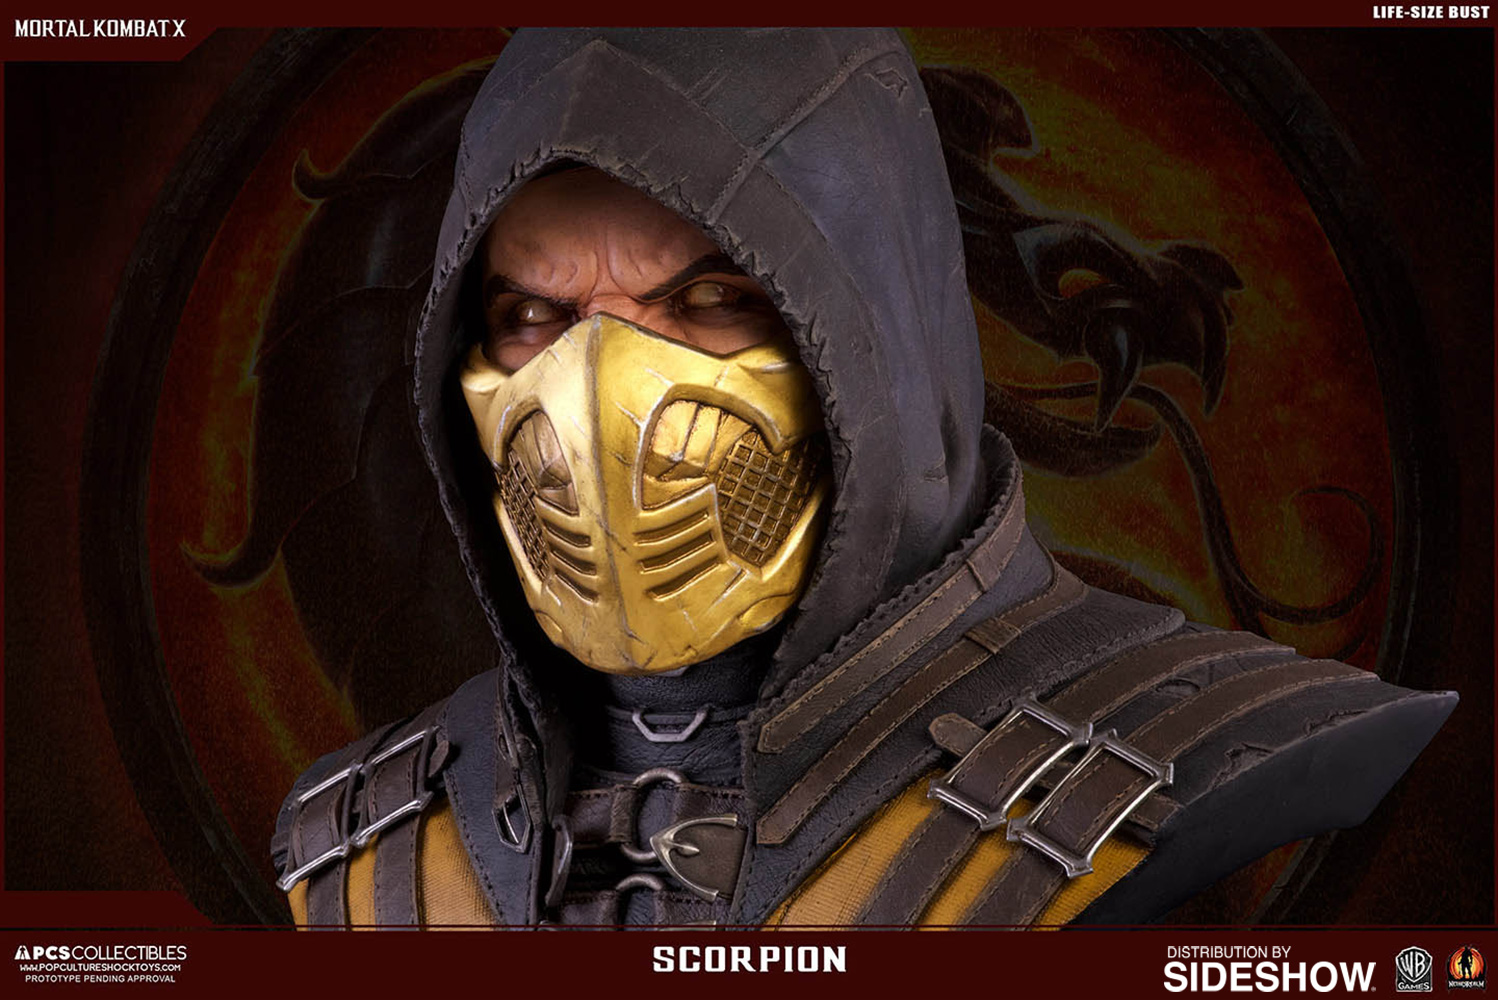 Mortal Kombat Scorpion Life Size Bust